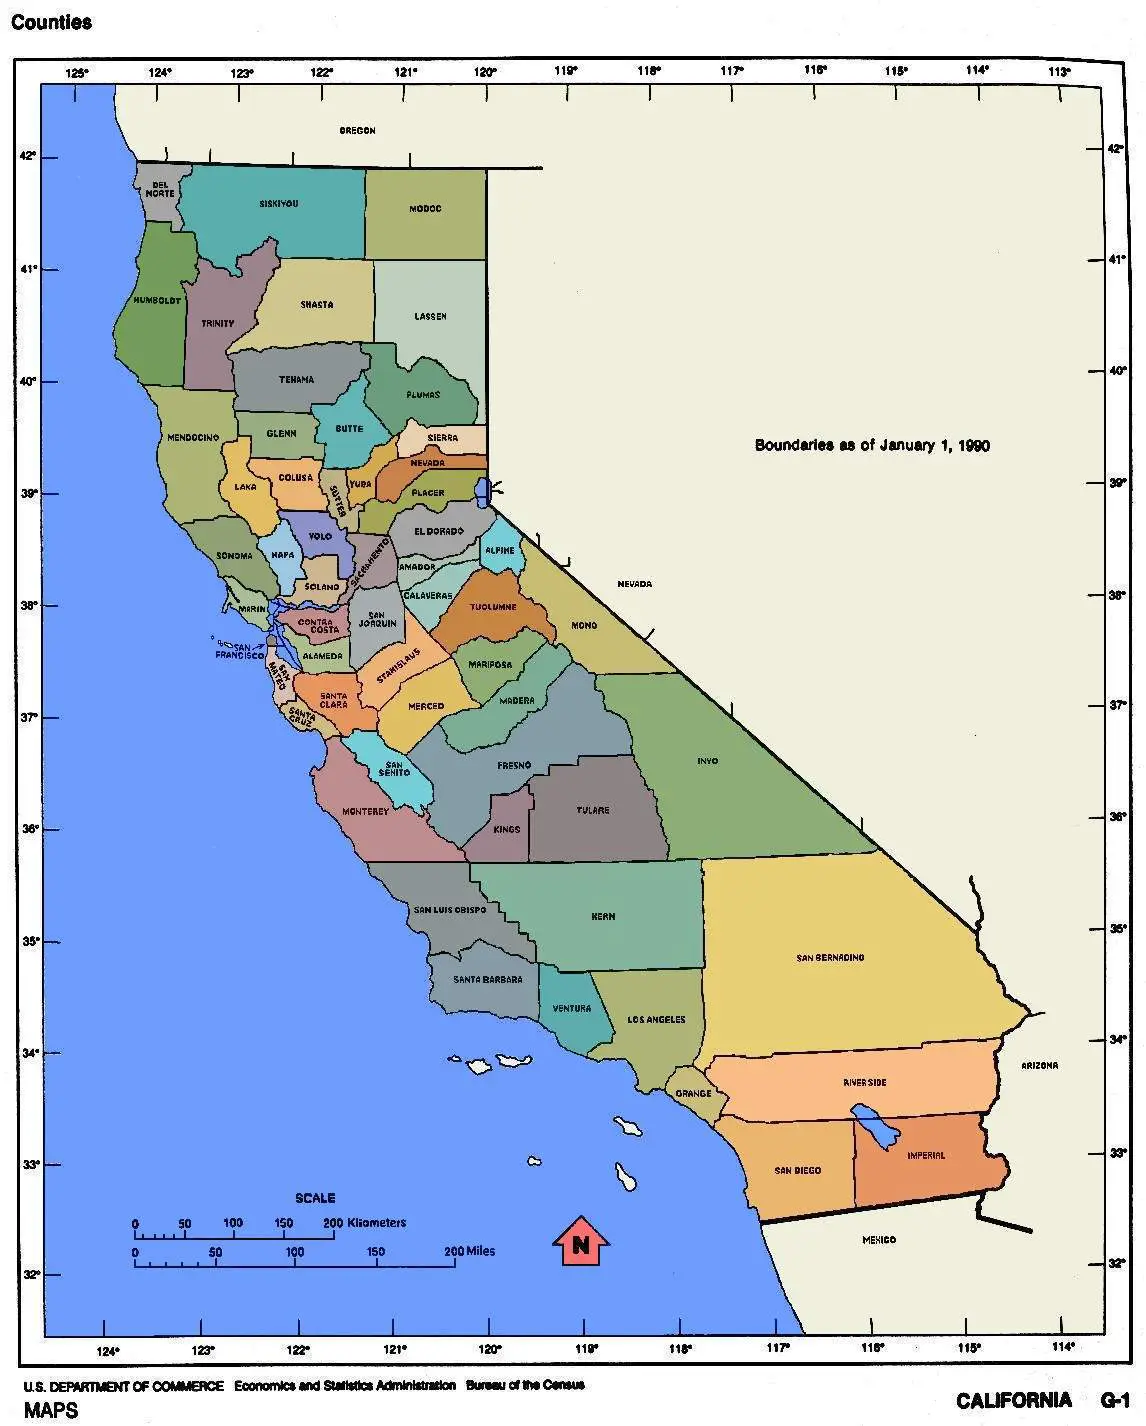 California Map - MapSof.net